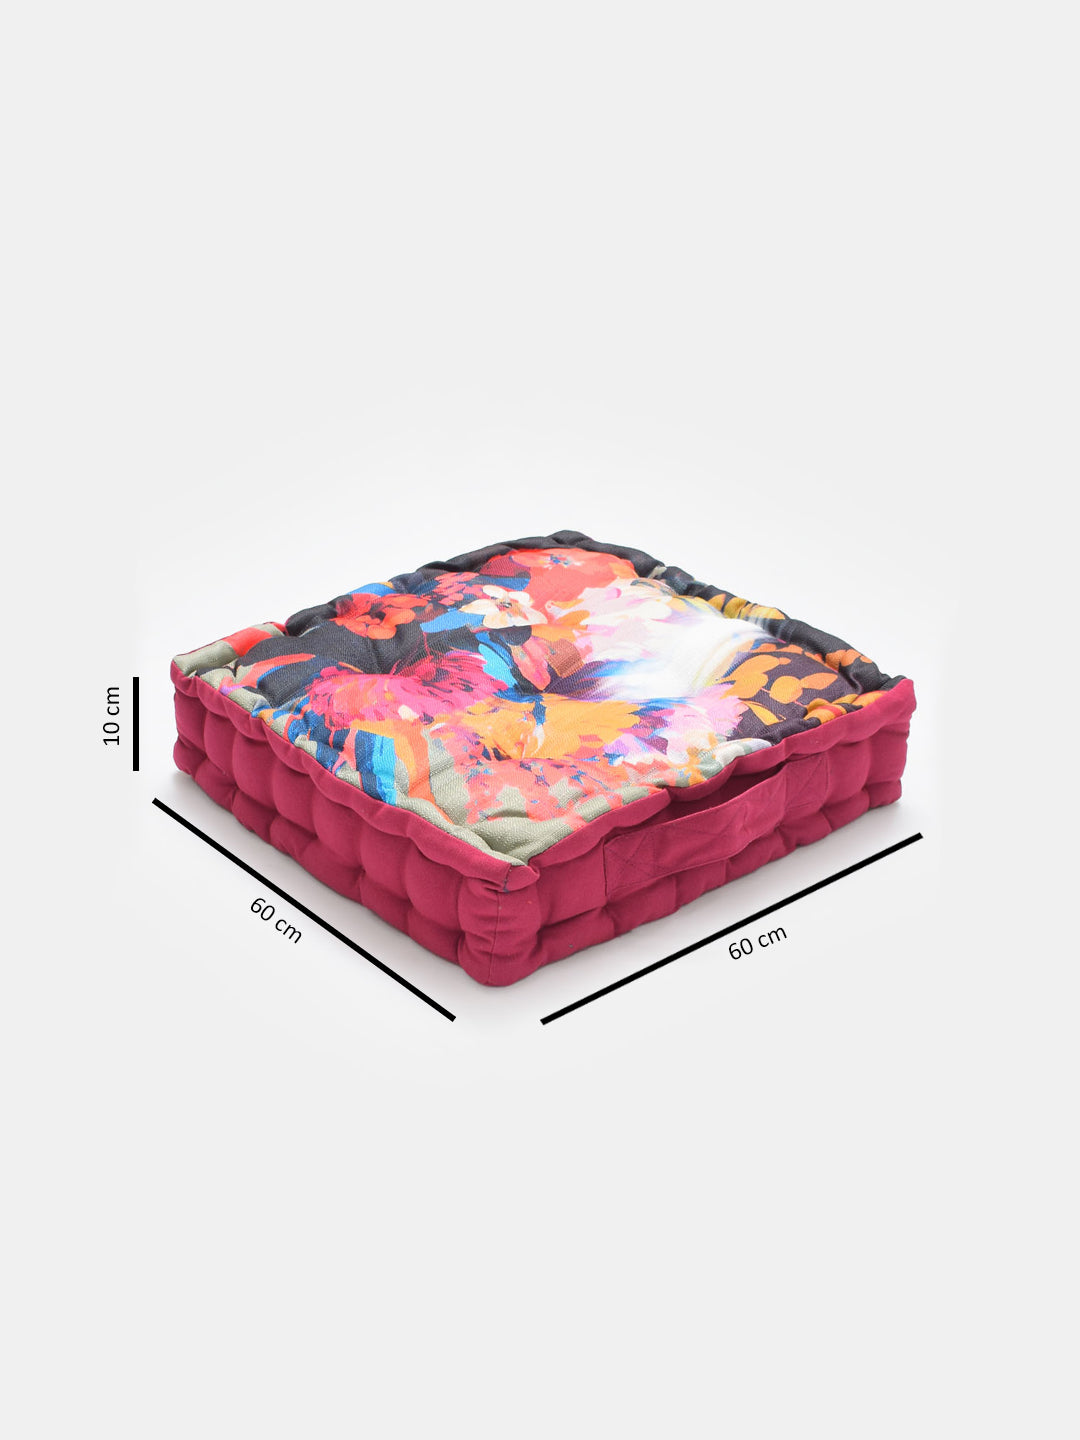 Blanc9 Bloomup Digitally Printed Floor Cushion